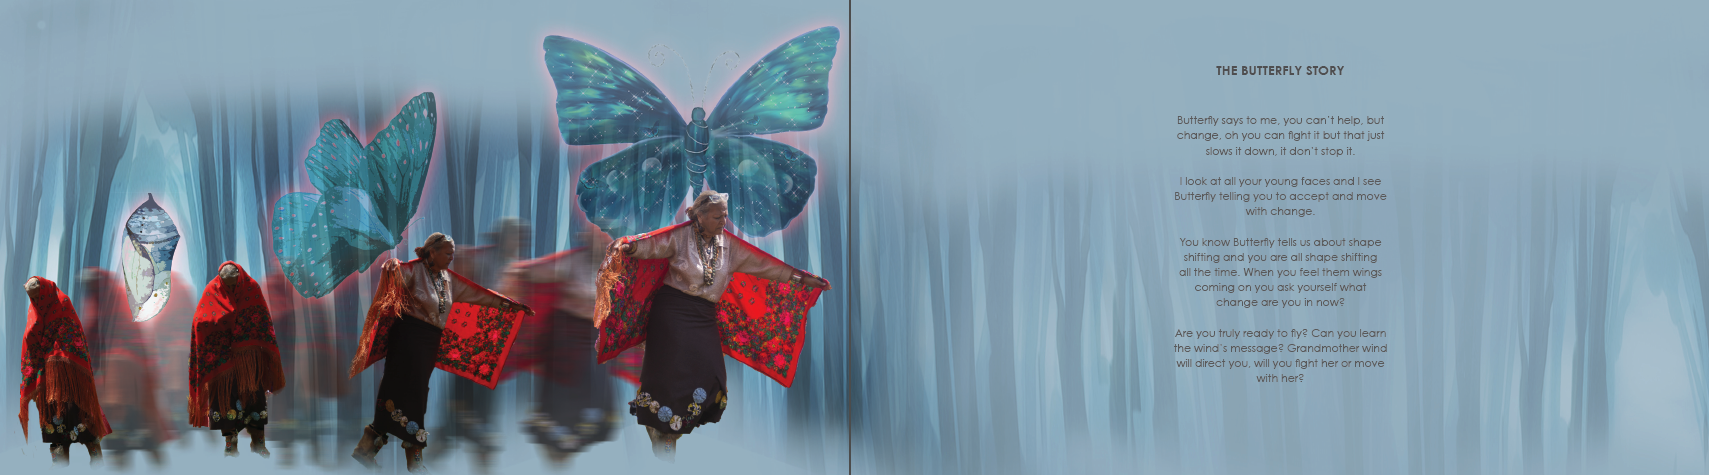 butterfly story